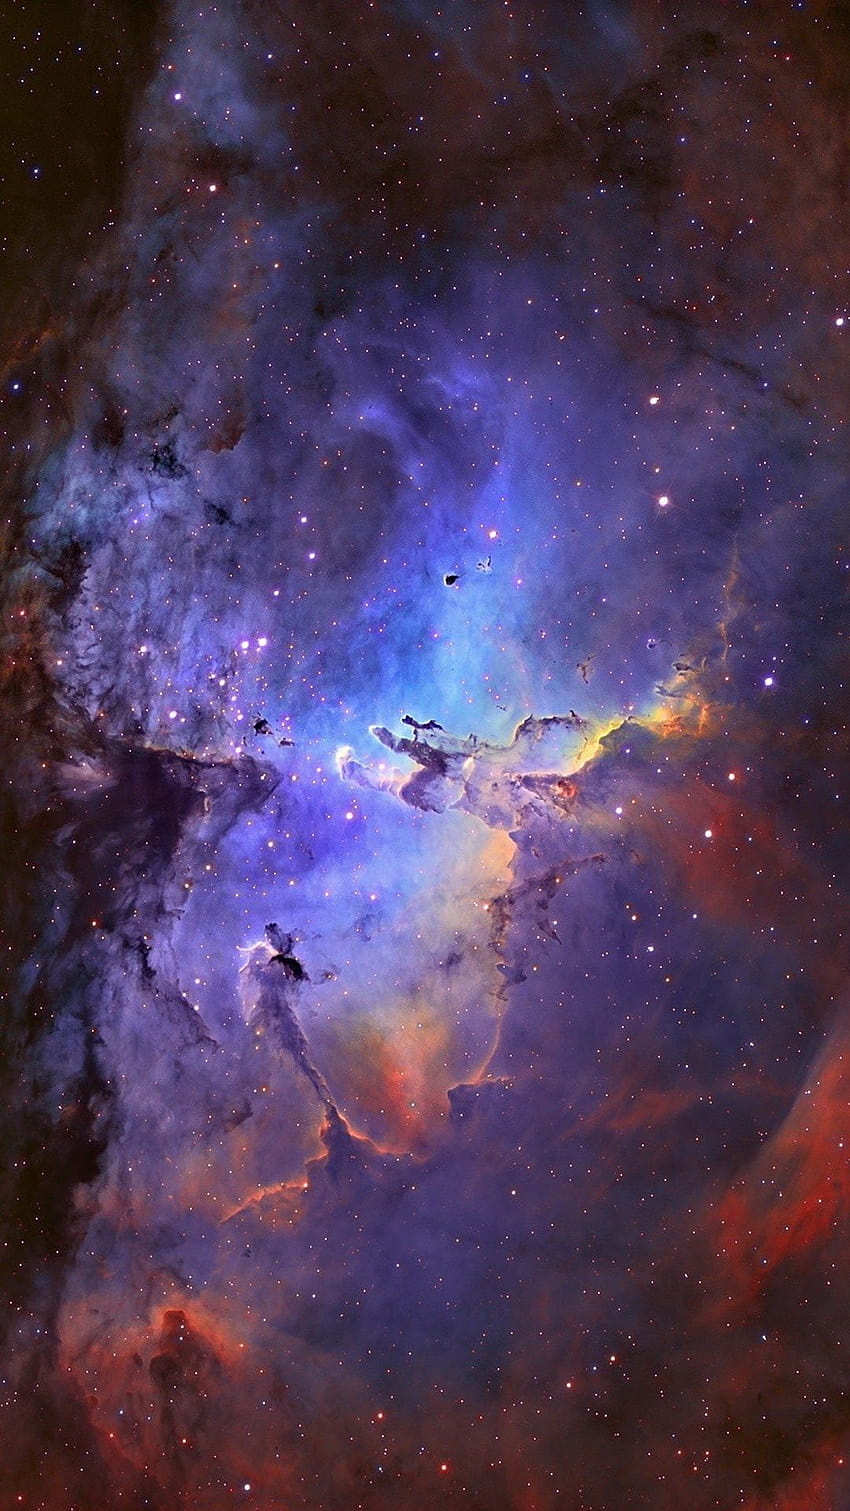 Orion Nebula Wallpaper 14x9 by GreasyGrandma on DeviantArt